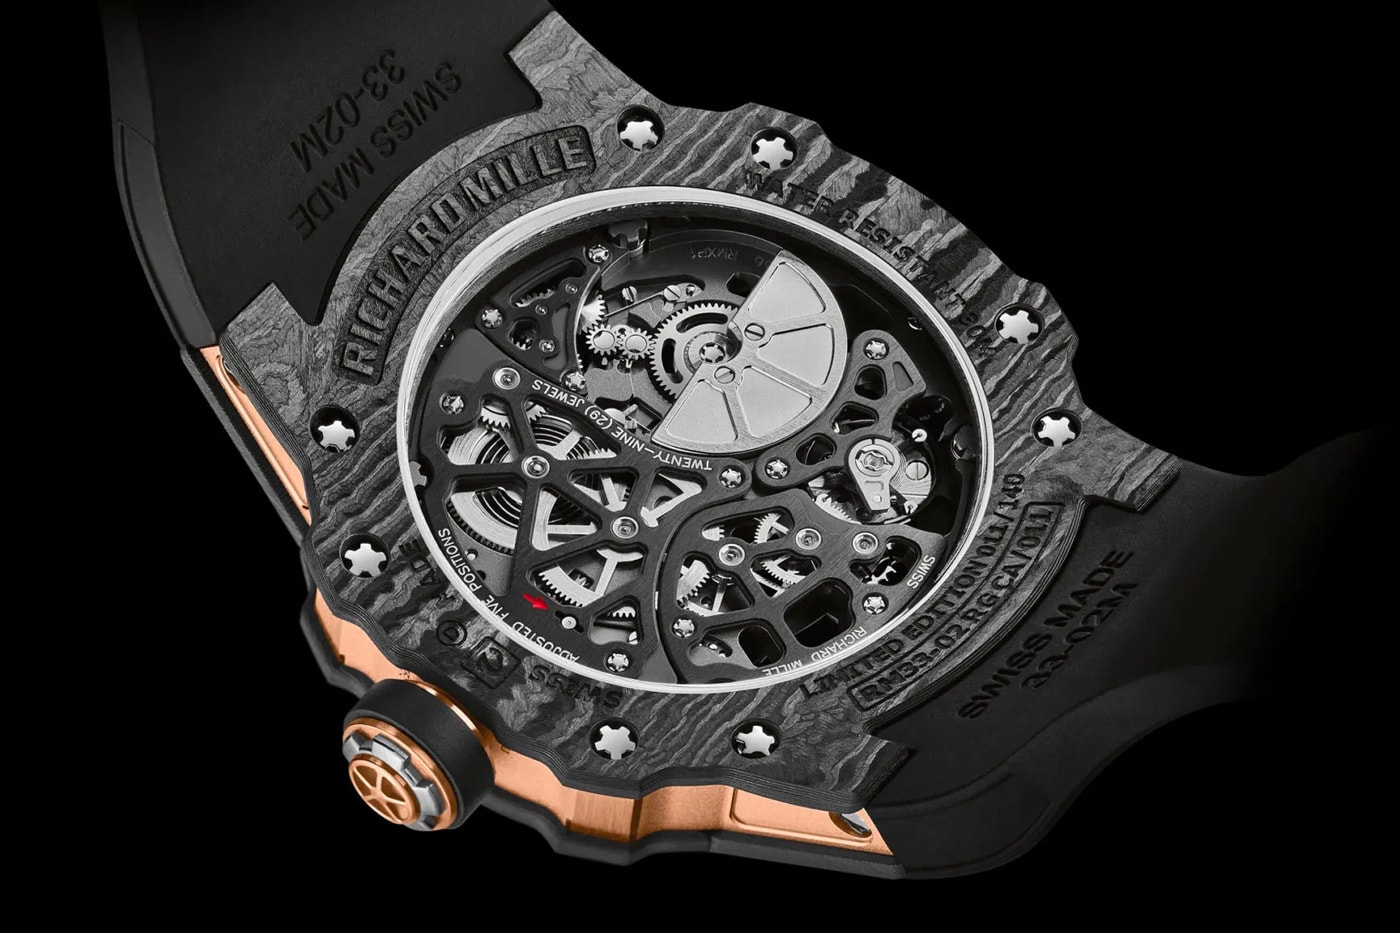 Richard Mille RM 33-02 Watch Info carbon case 41mm swiss design RM watches Luxury timepiece gold 